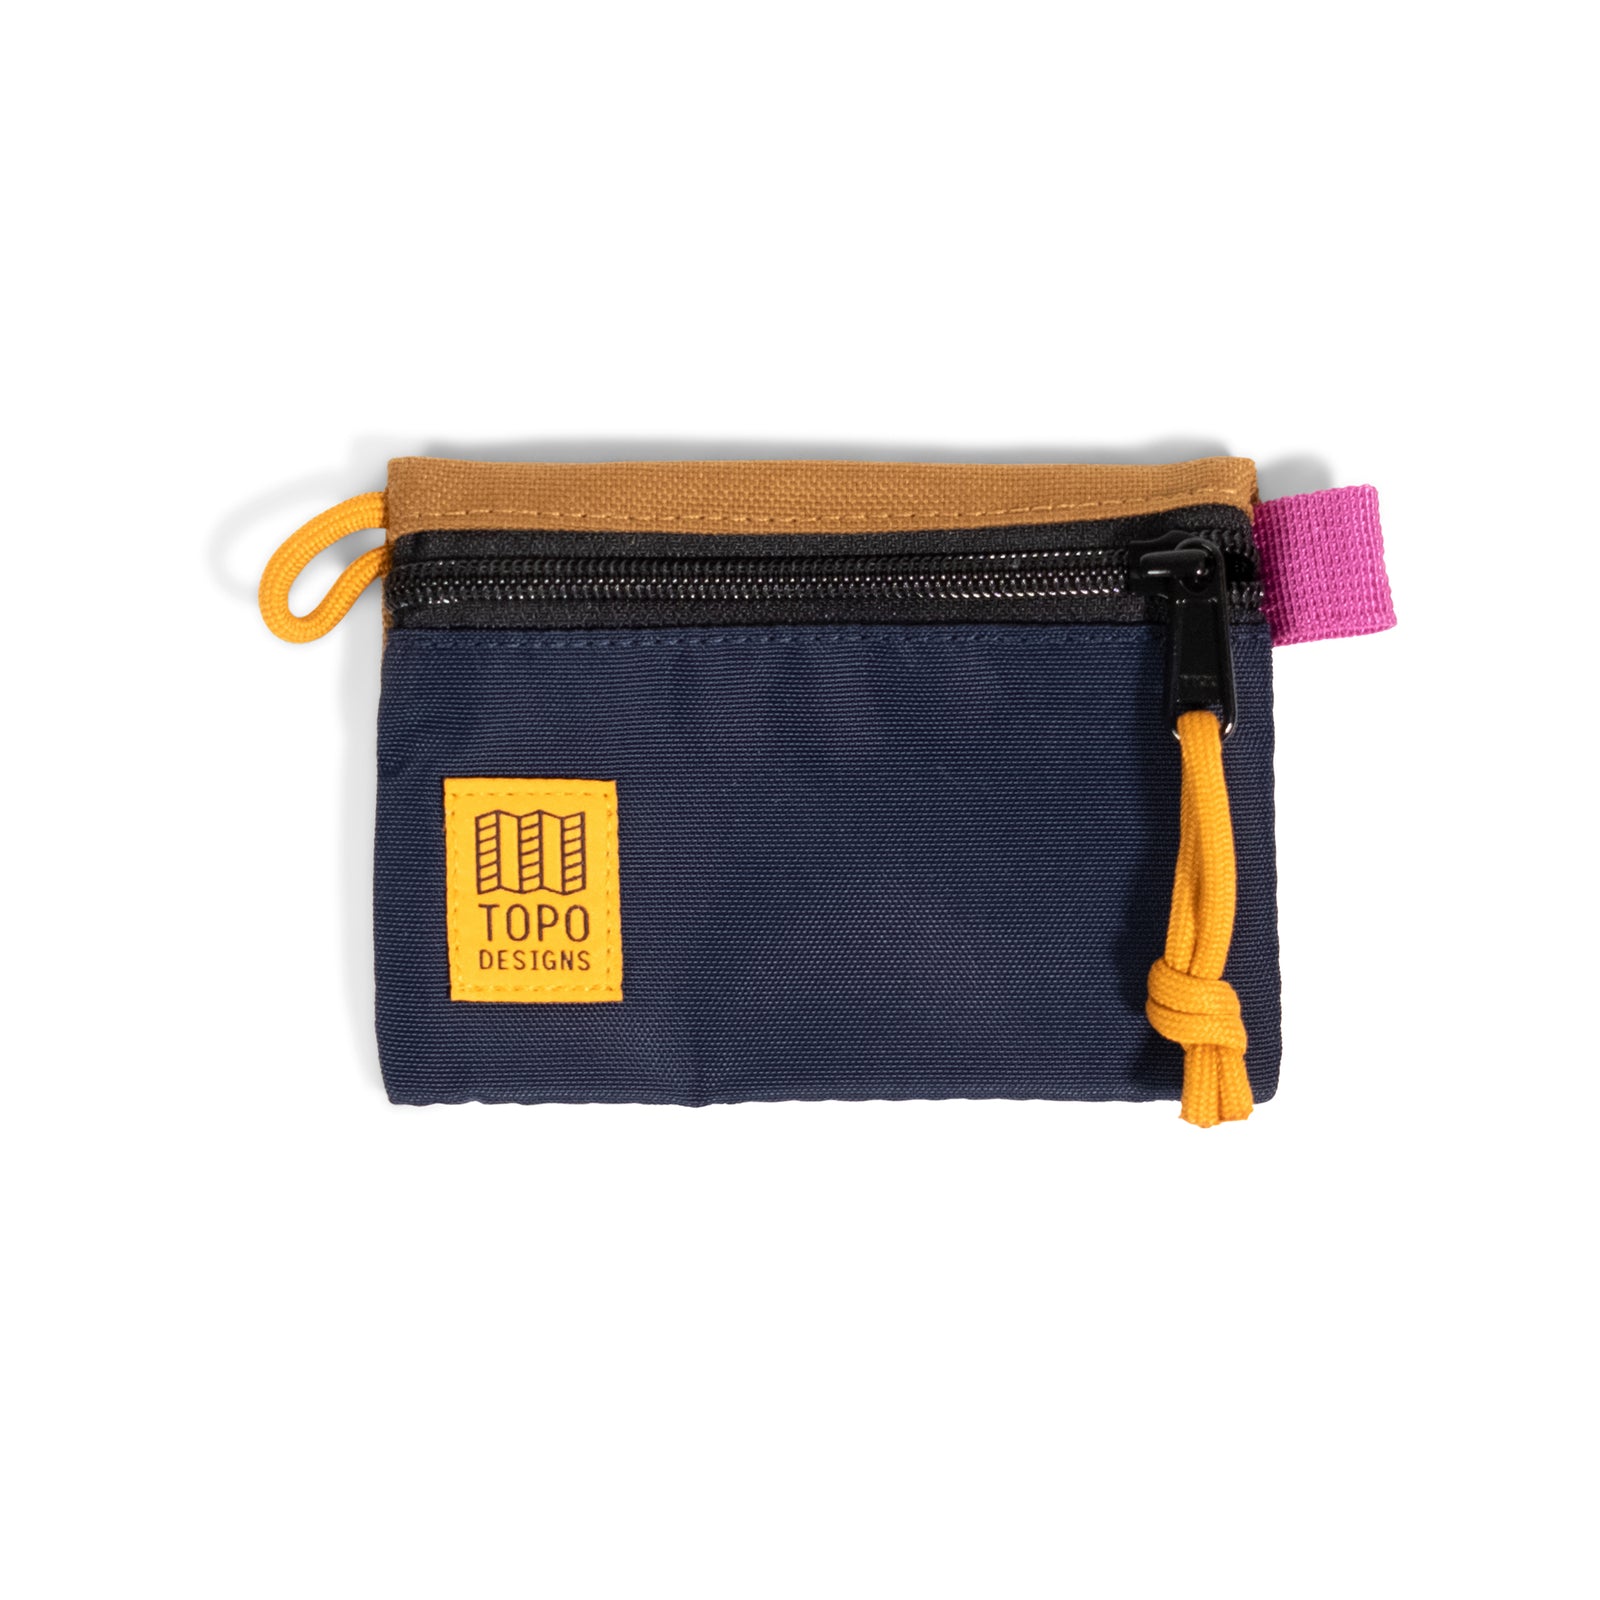 Topo Designs Accessory Bag "Medium" in "Dark Khaki / Navy"